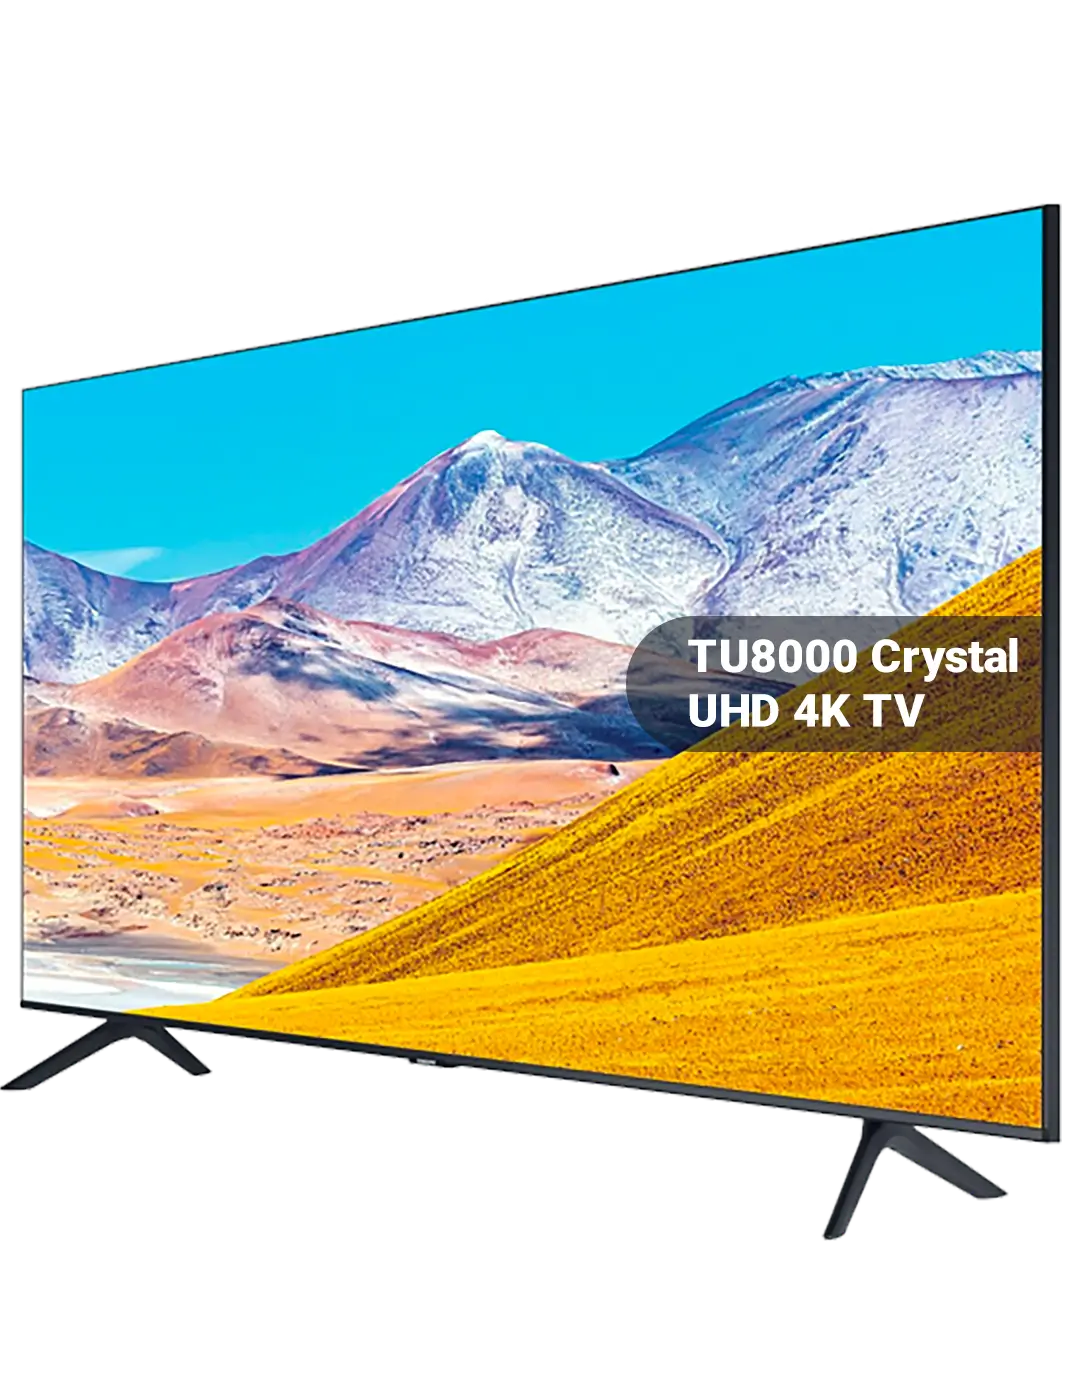 Samsung TU8000 Crystal UHD 4K TV